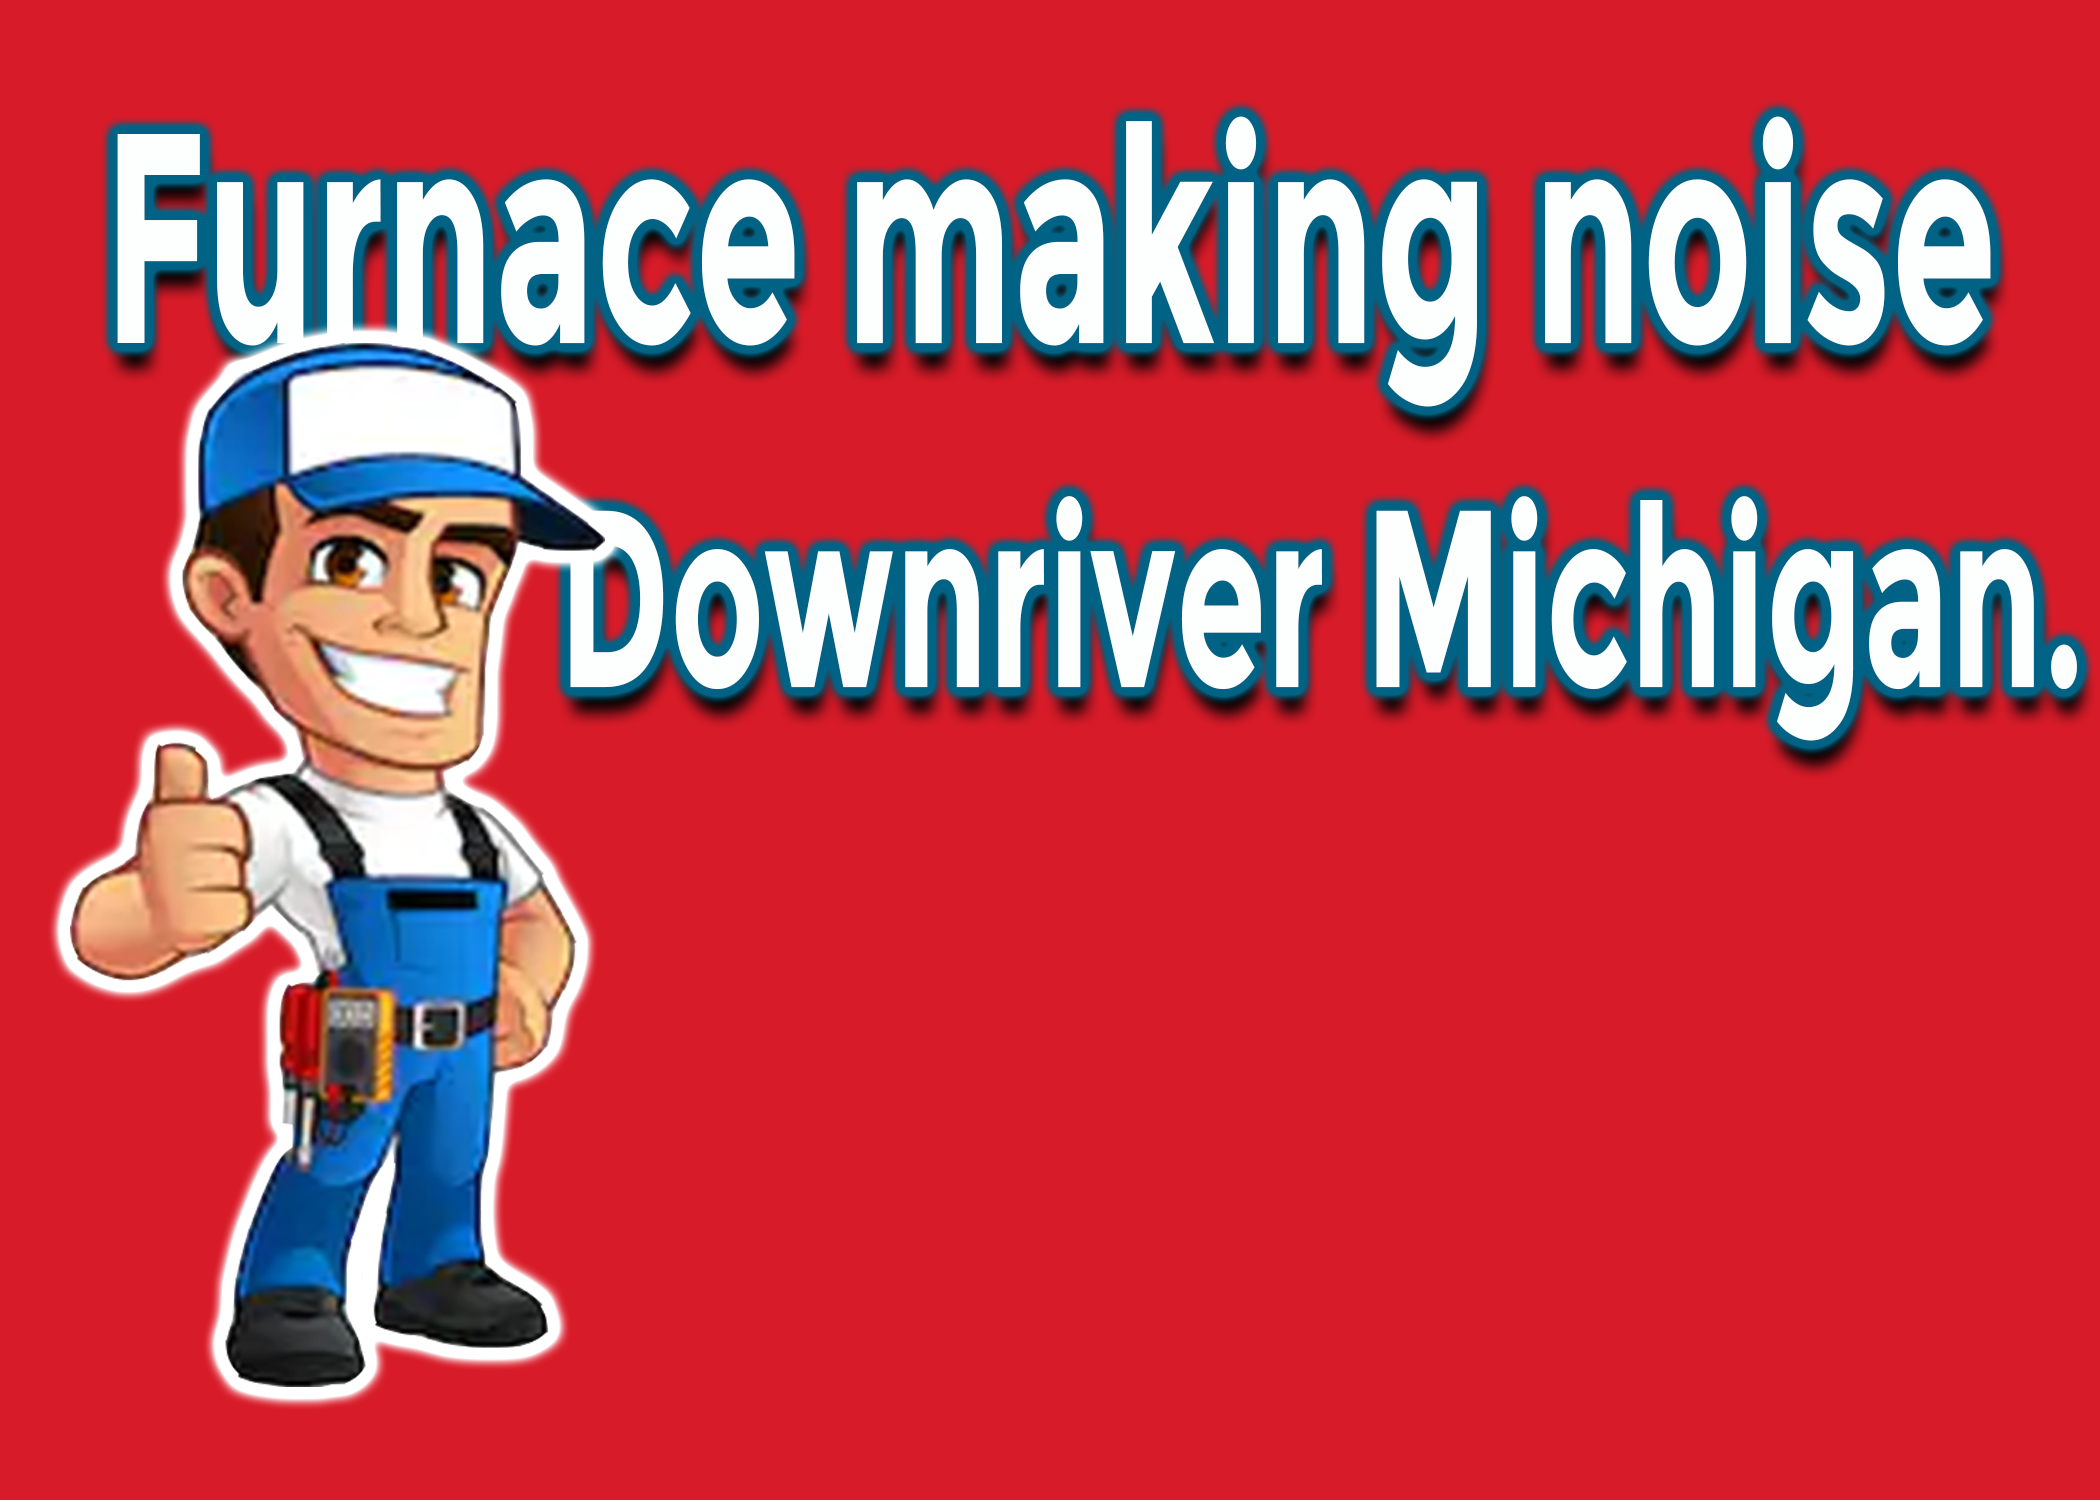 Furnace making noise Downriver Michigan